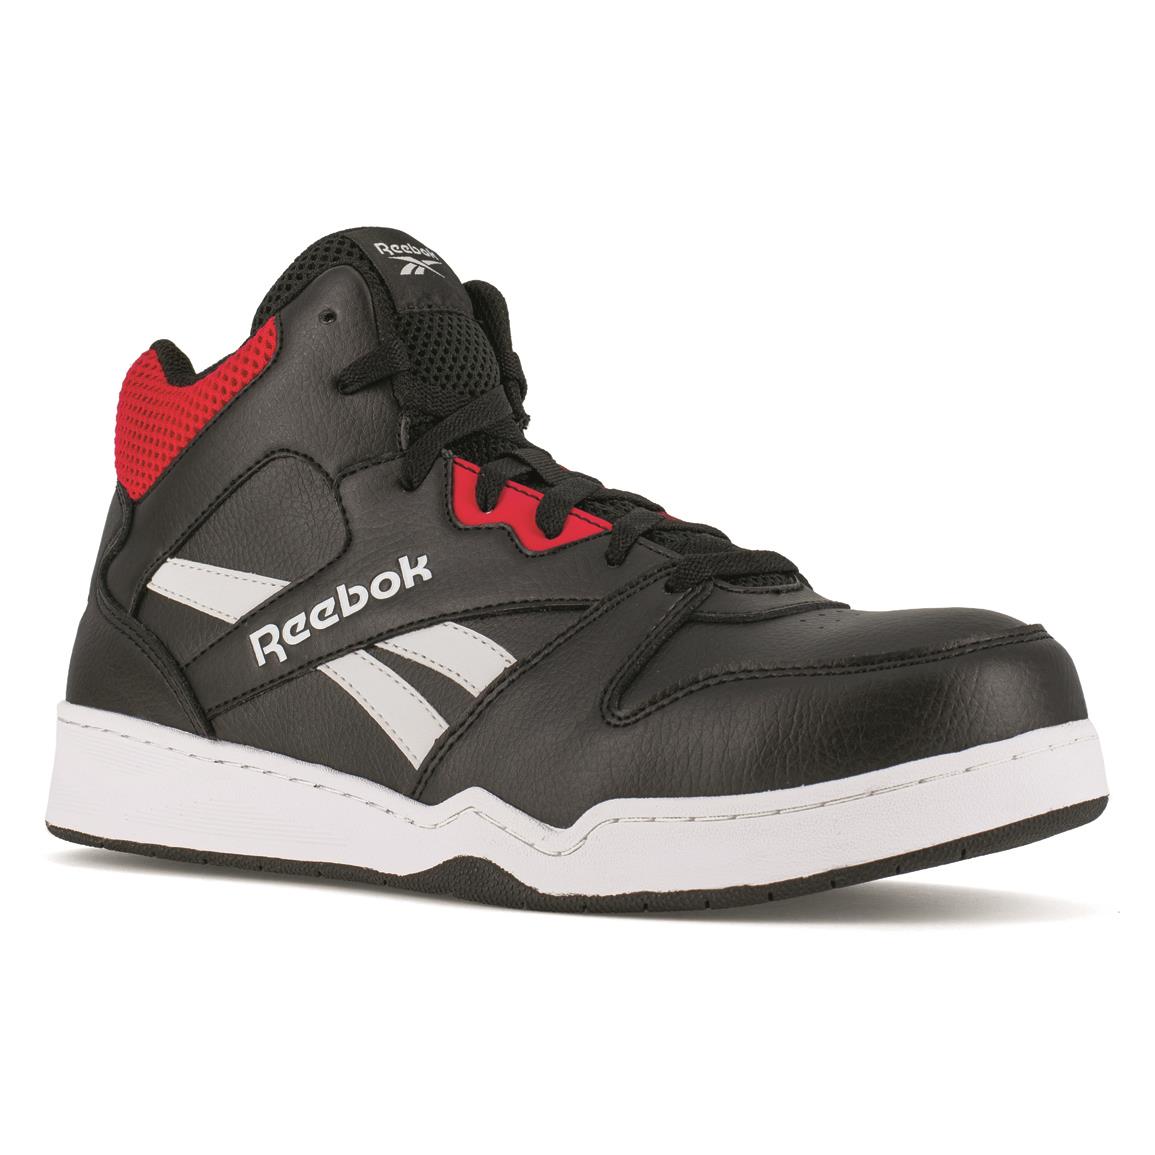 Reebok Men's Comp Toe High Top Work Shoes, Black/Red